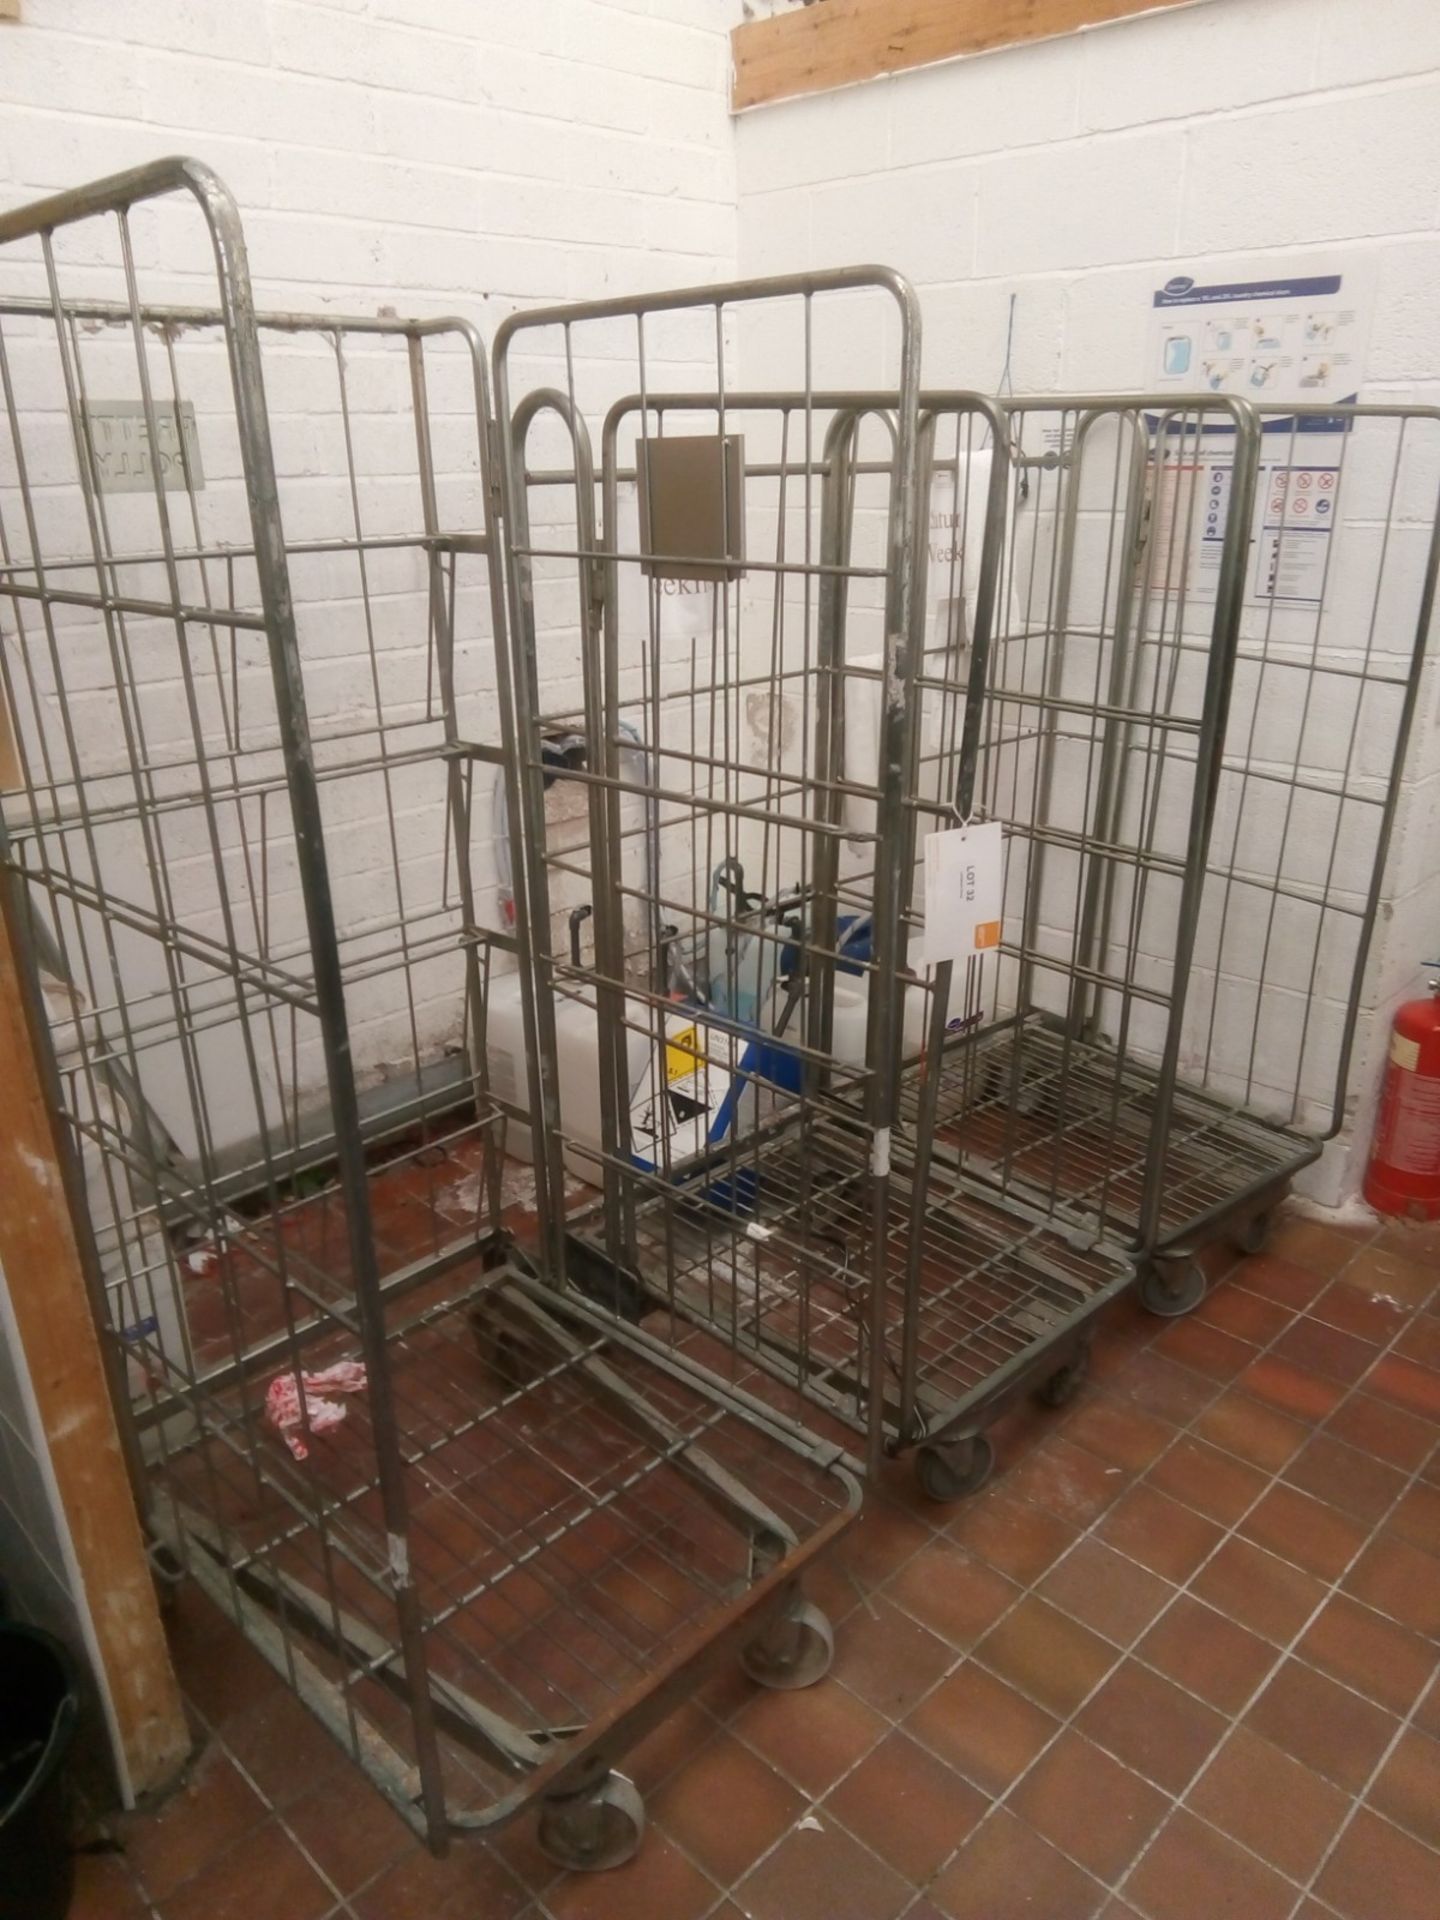 3 x mobile metal laundry trolleys